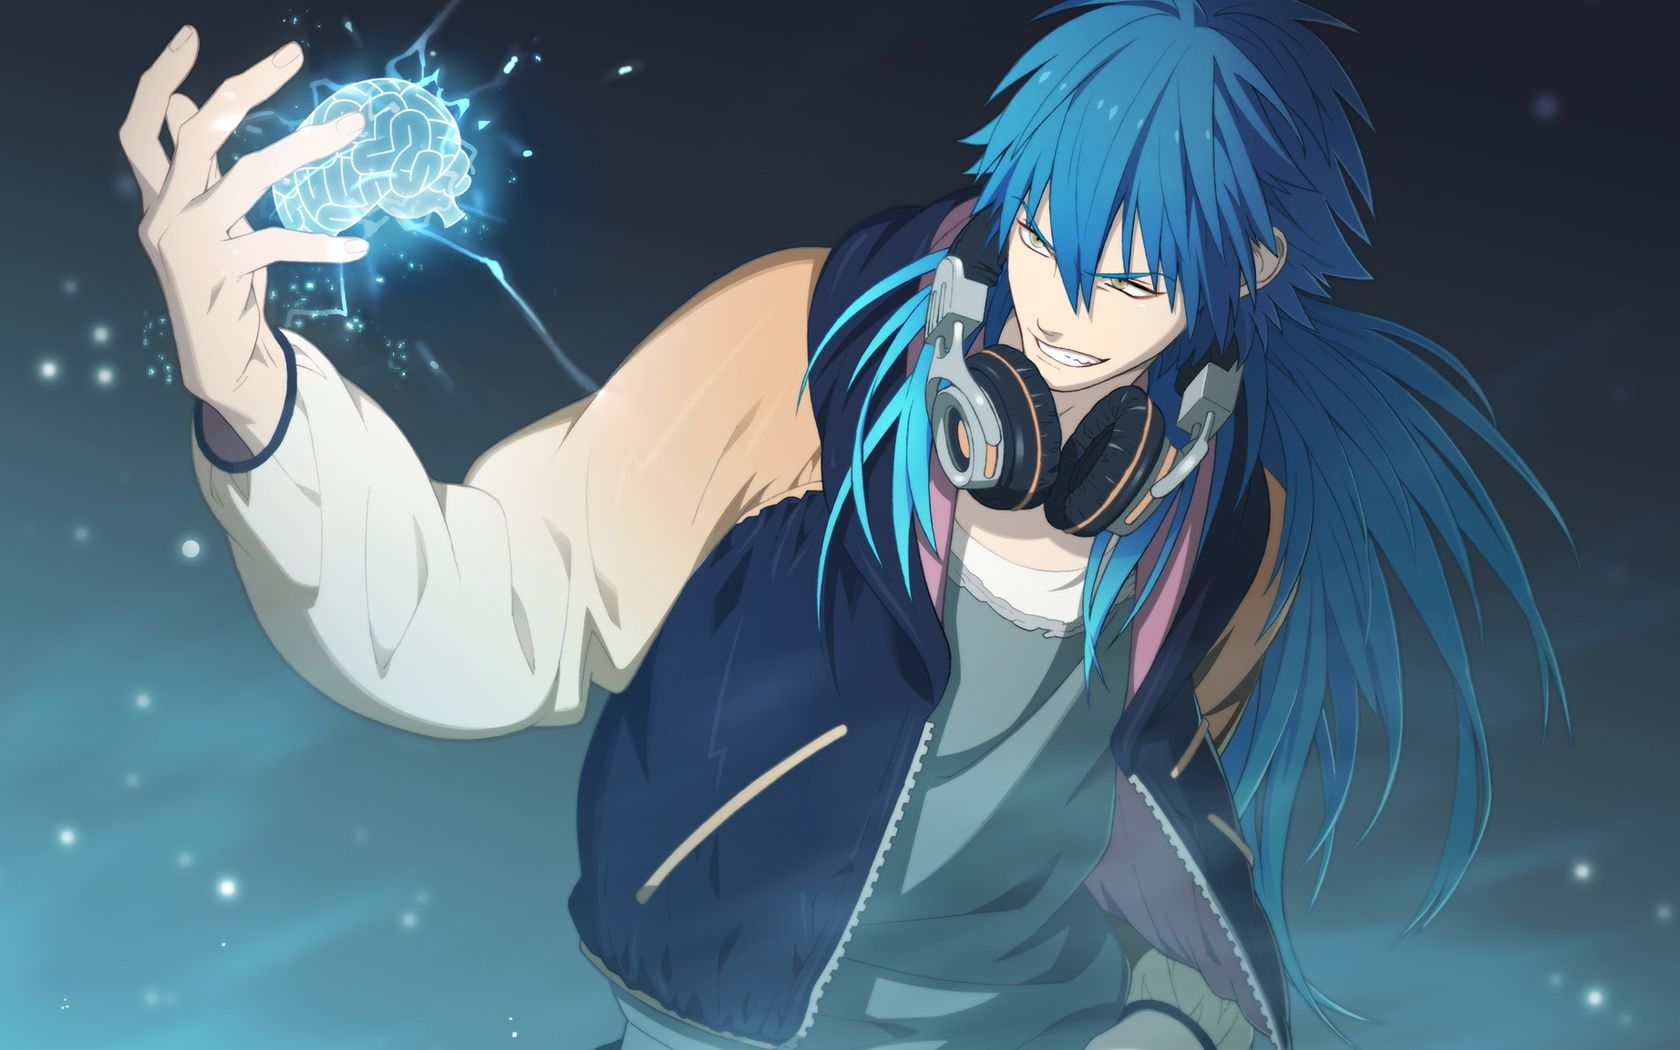 Cool Anime Boy with Blue Hair